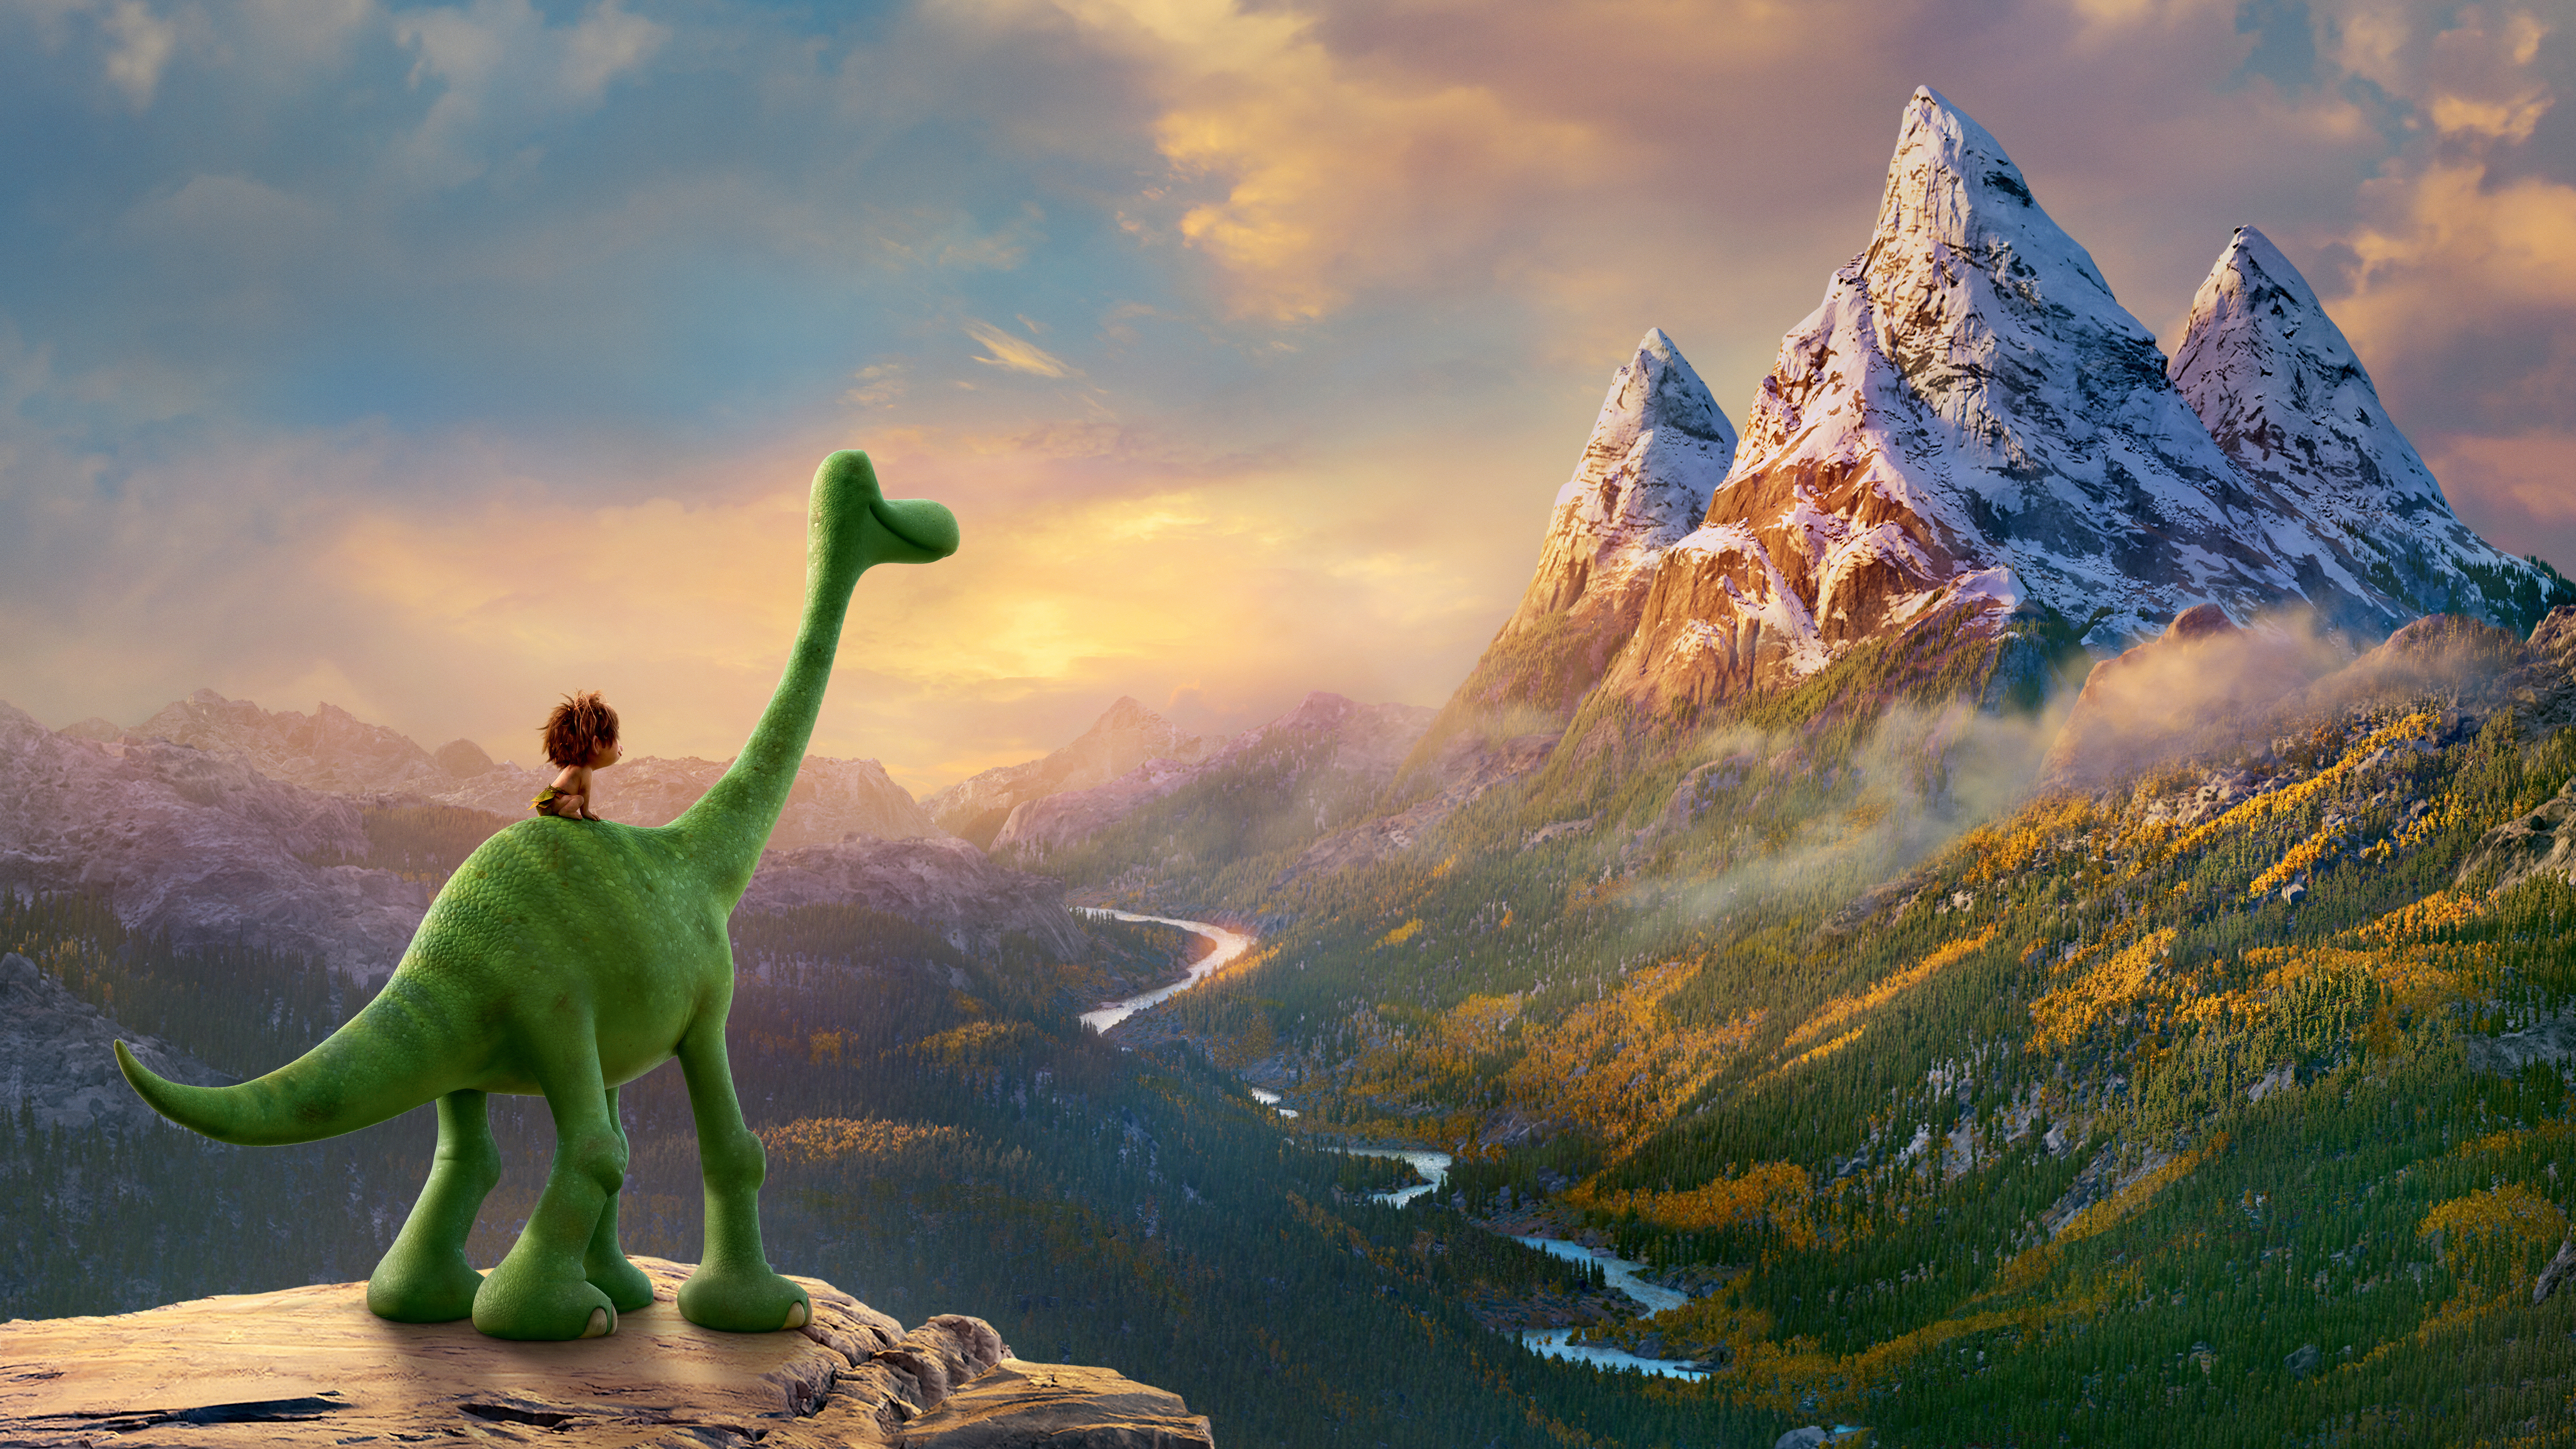 Movie The Good Dinosaur HD Wallpaper | Background Image